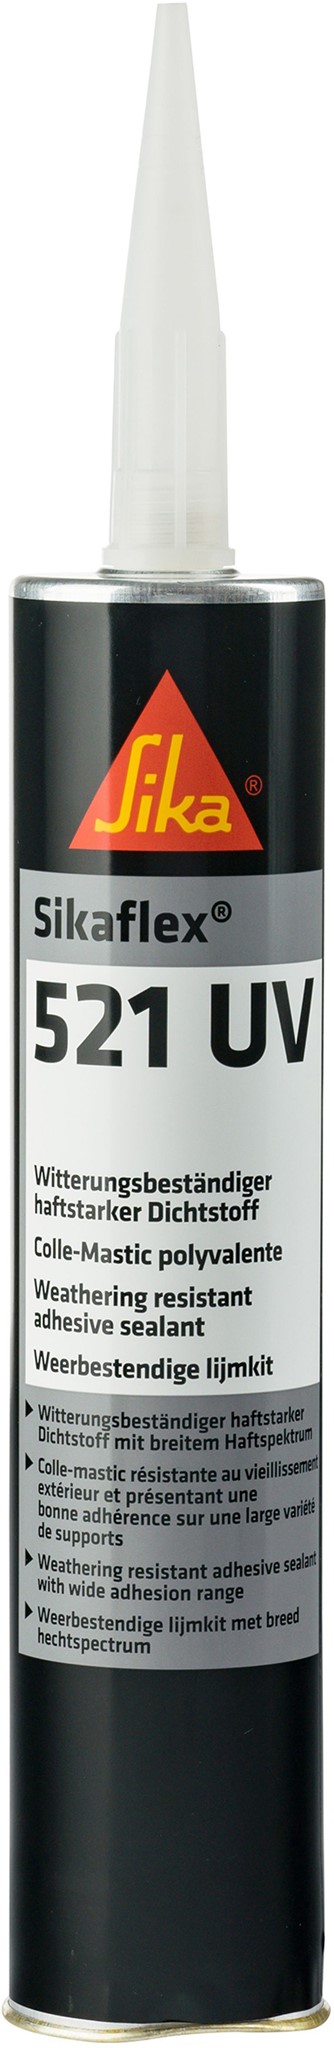 Image de Sikaflex-521 UV hellgrau 300ml Kartusche